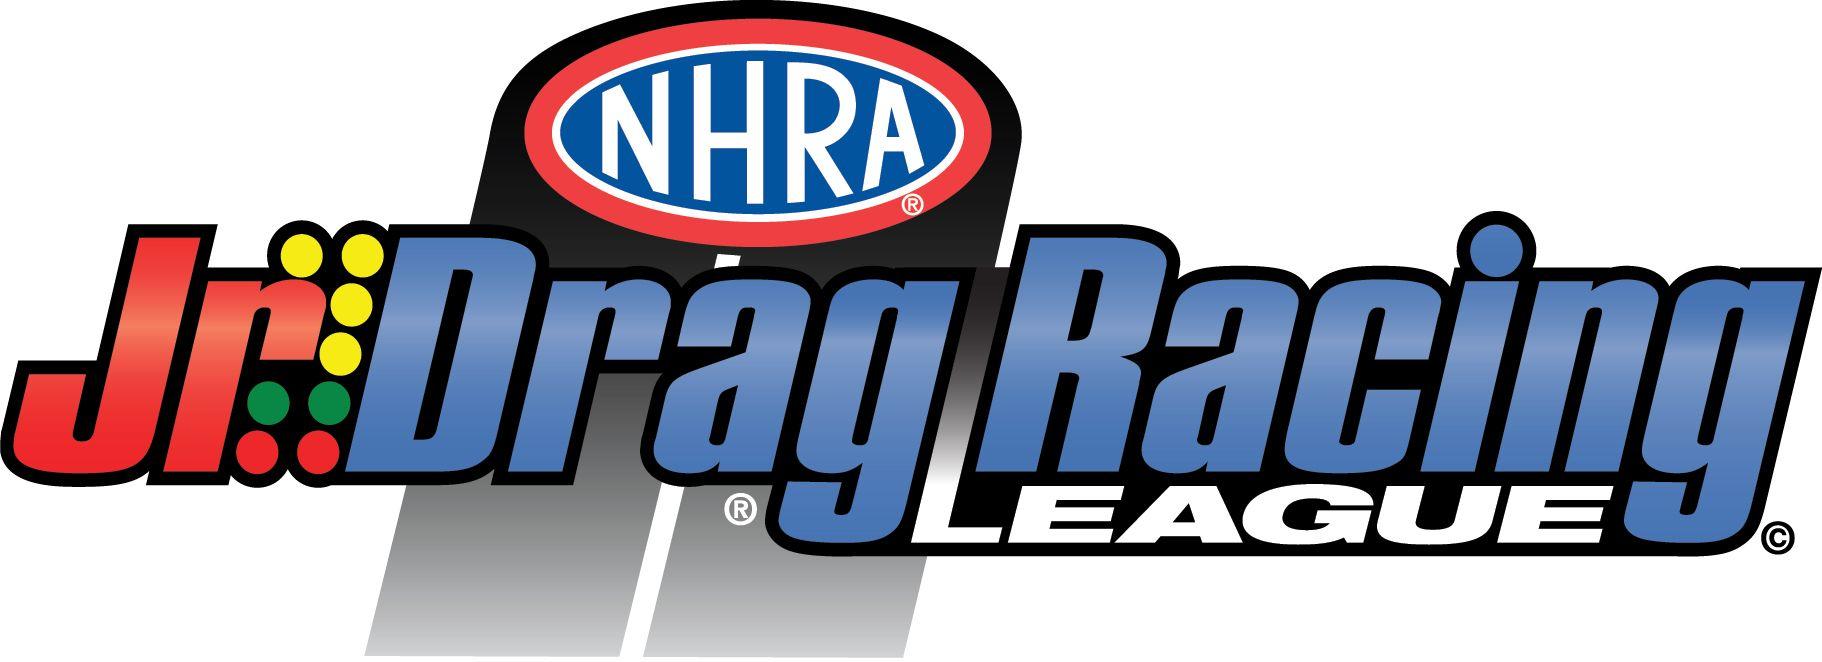 NHRA Drag Racing Logo - dragraceresults Information. Drag Race Results